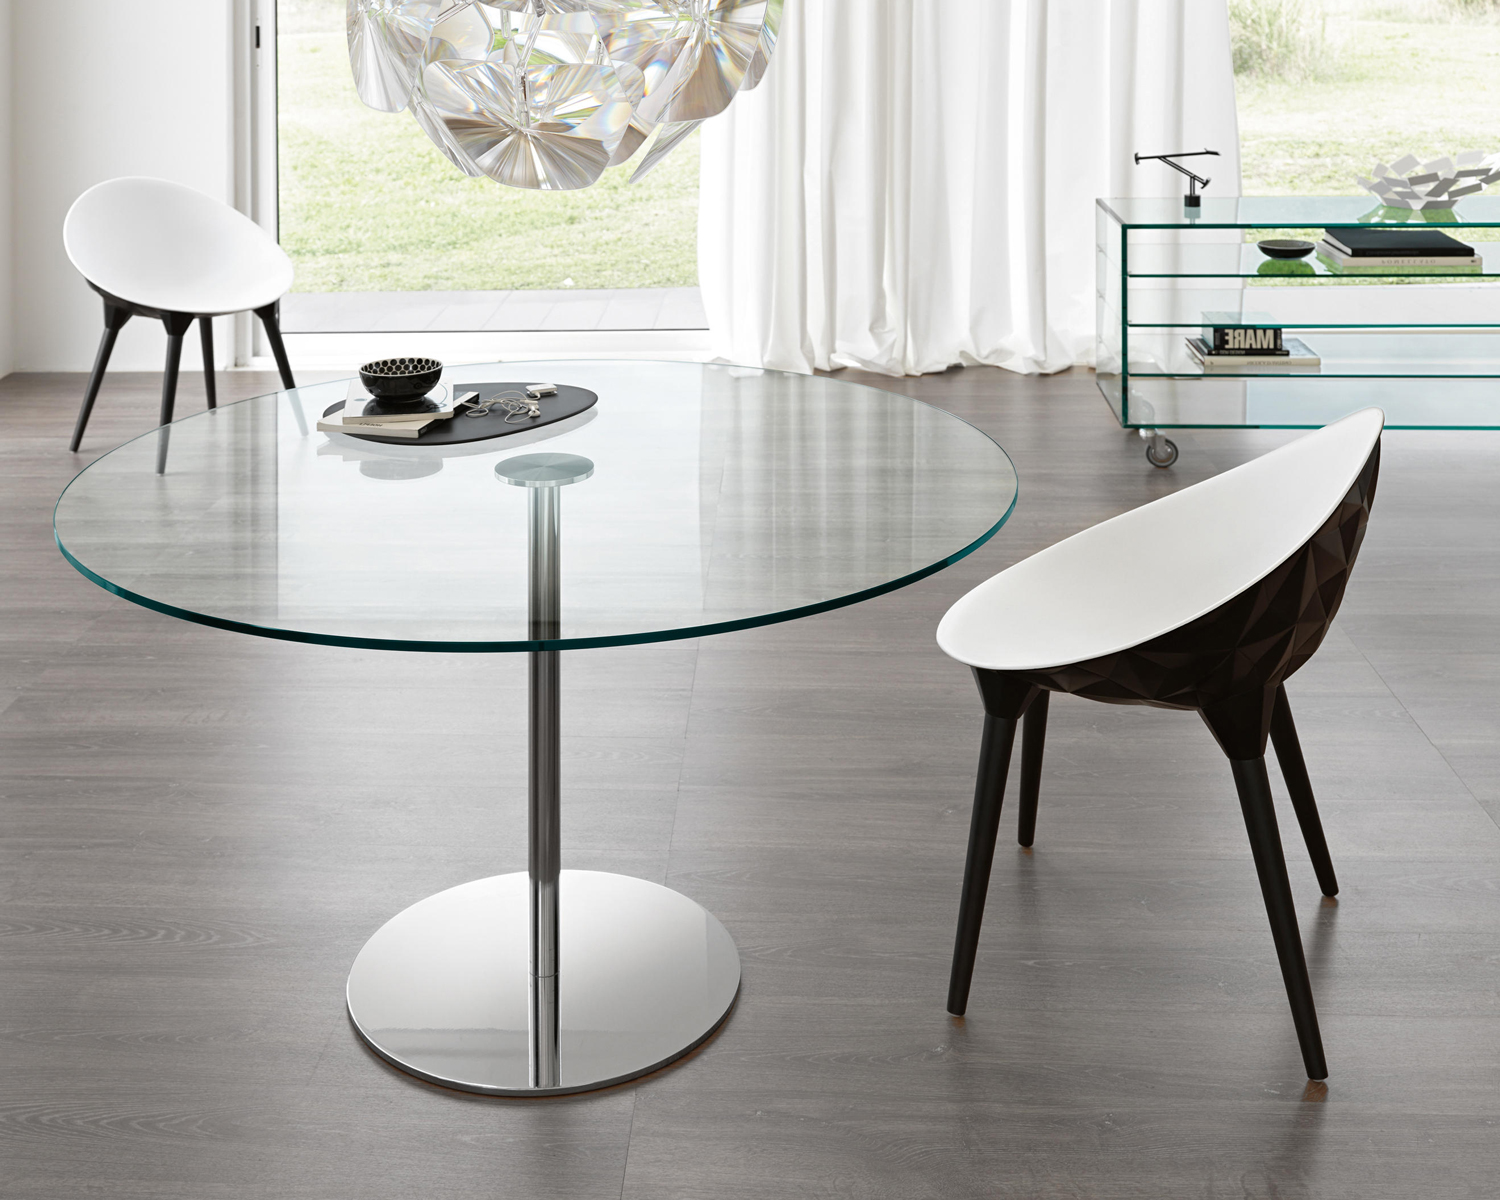 Stylish Farniente Table - Italian Designer & Luxury Furniture by Cassoni